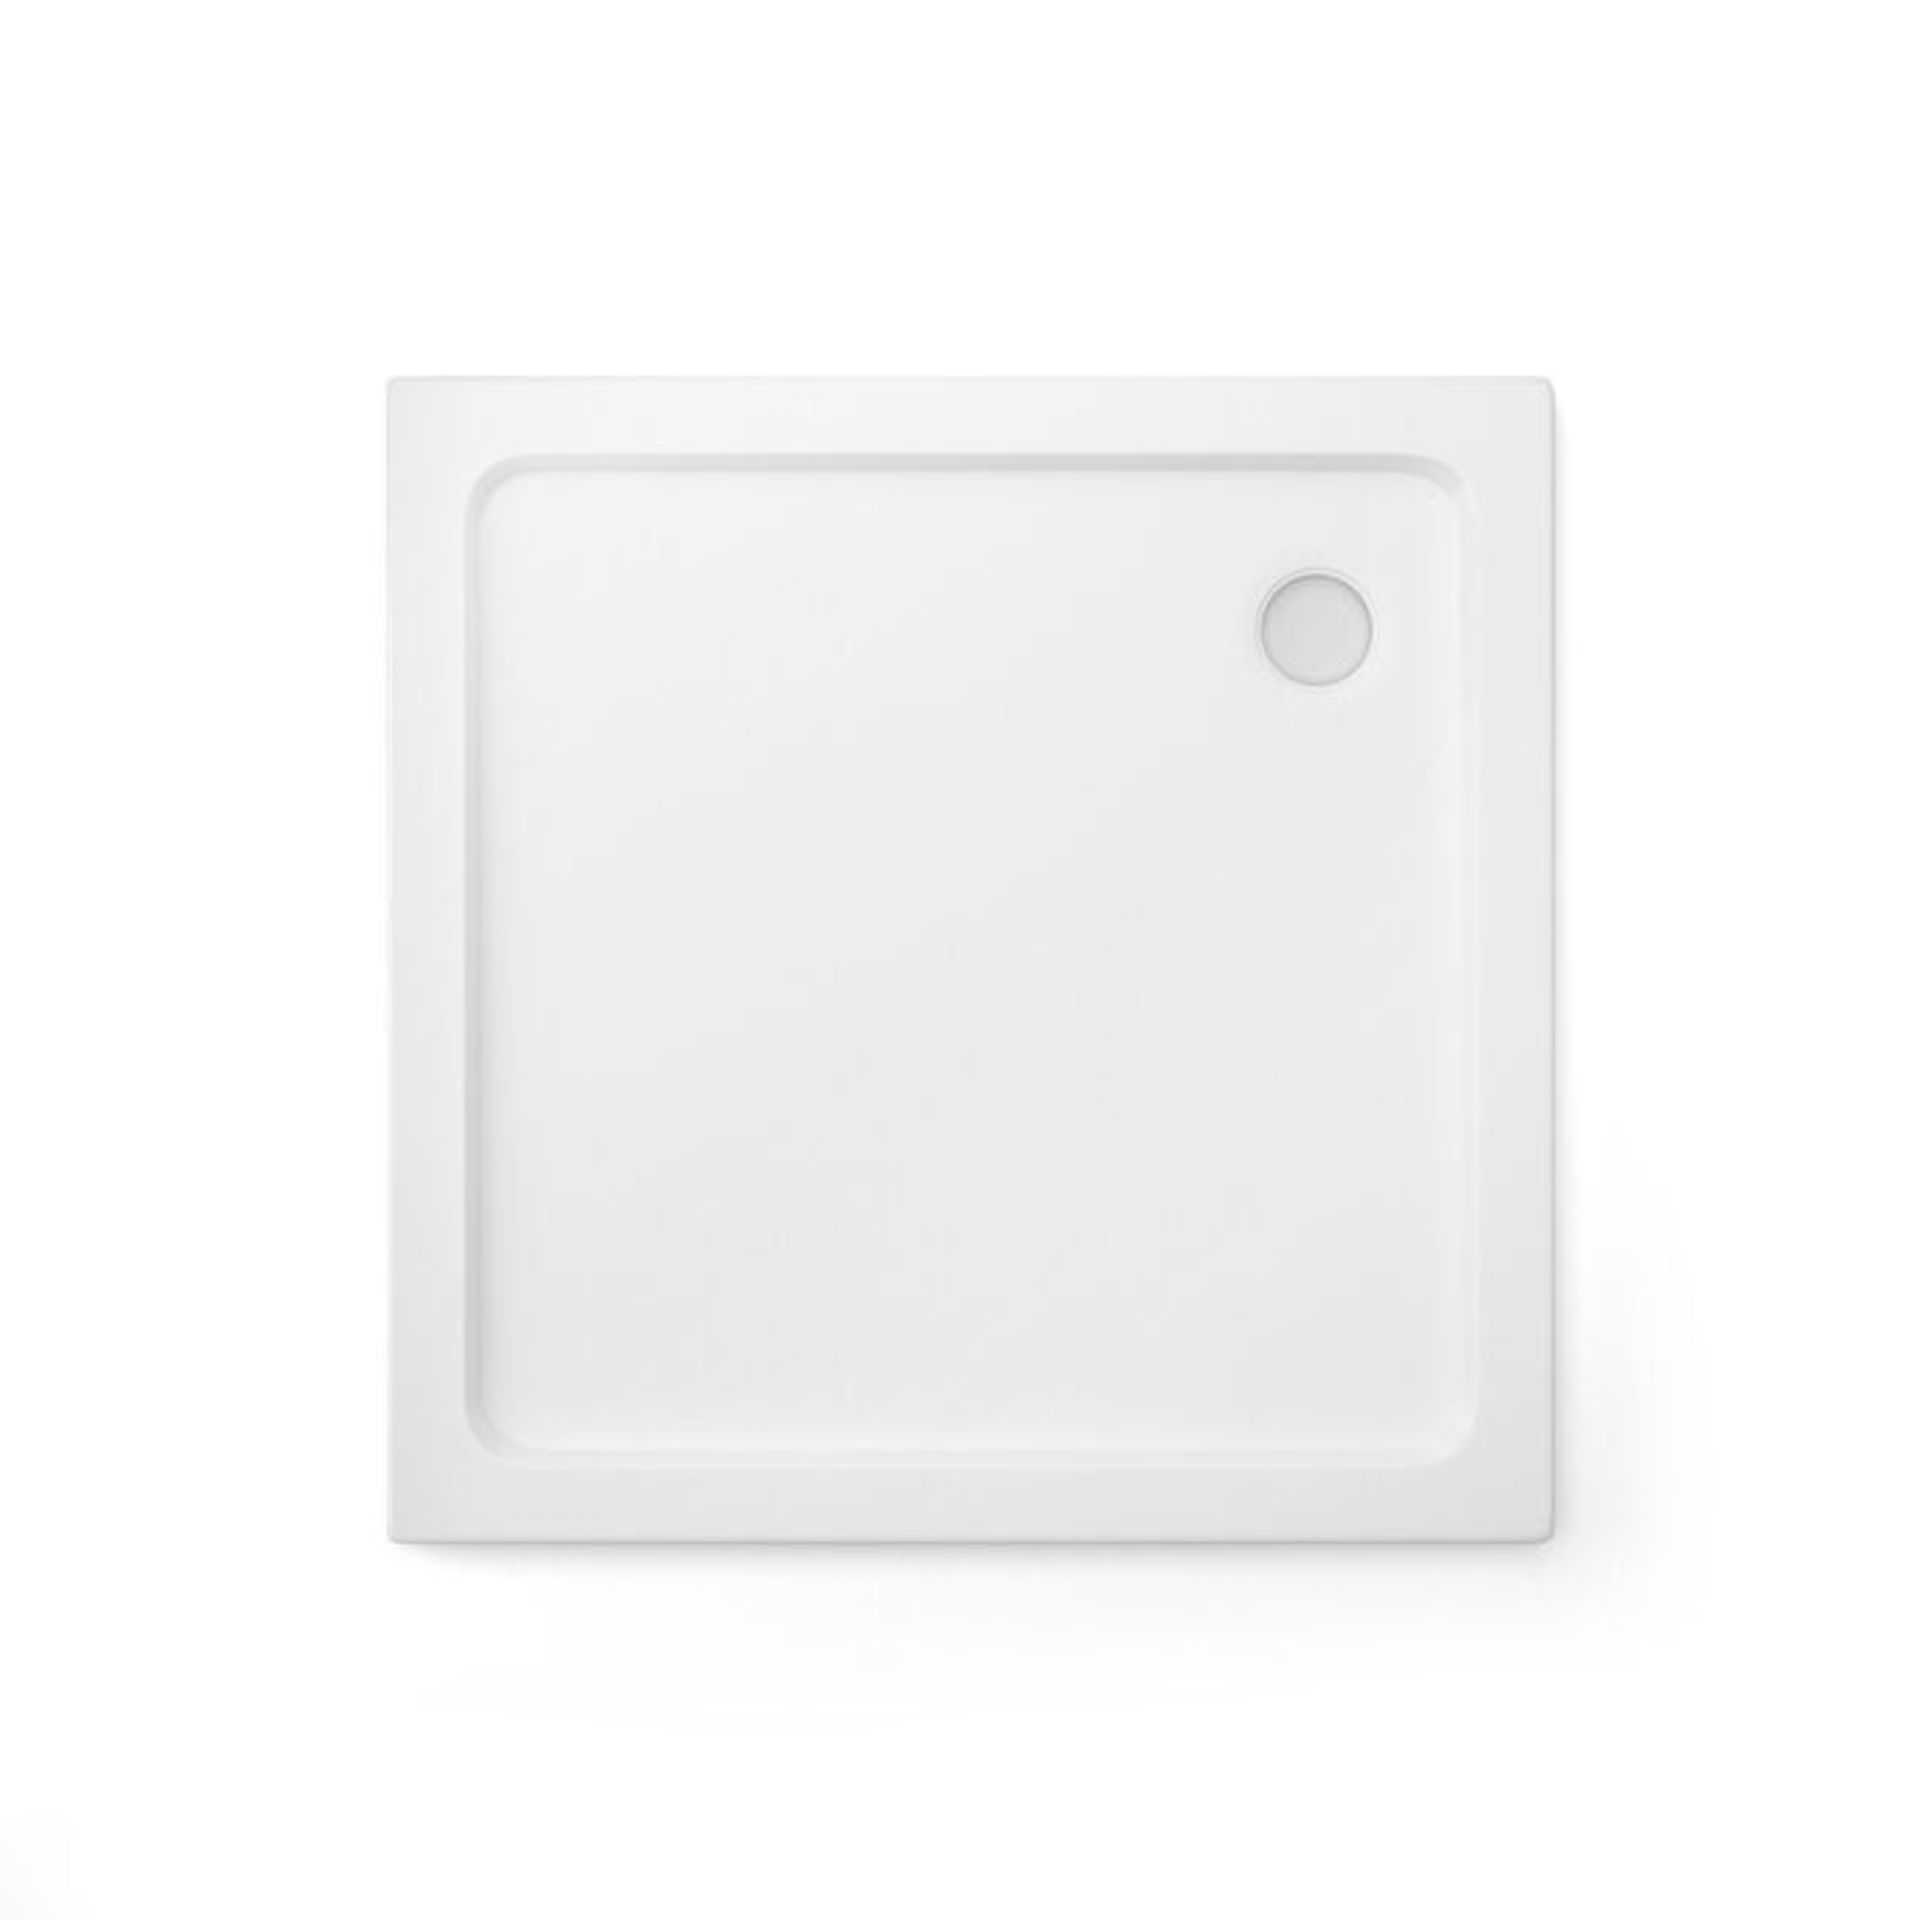 (DW205) 900x900mm Square Ultra Slim Stone Shower Tray. Low profile ultra slim design Gel coate...